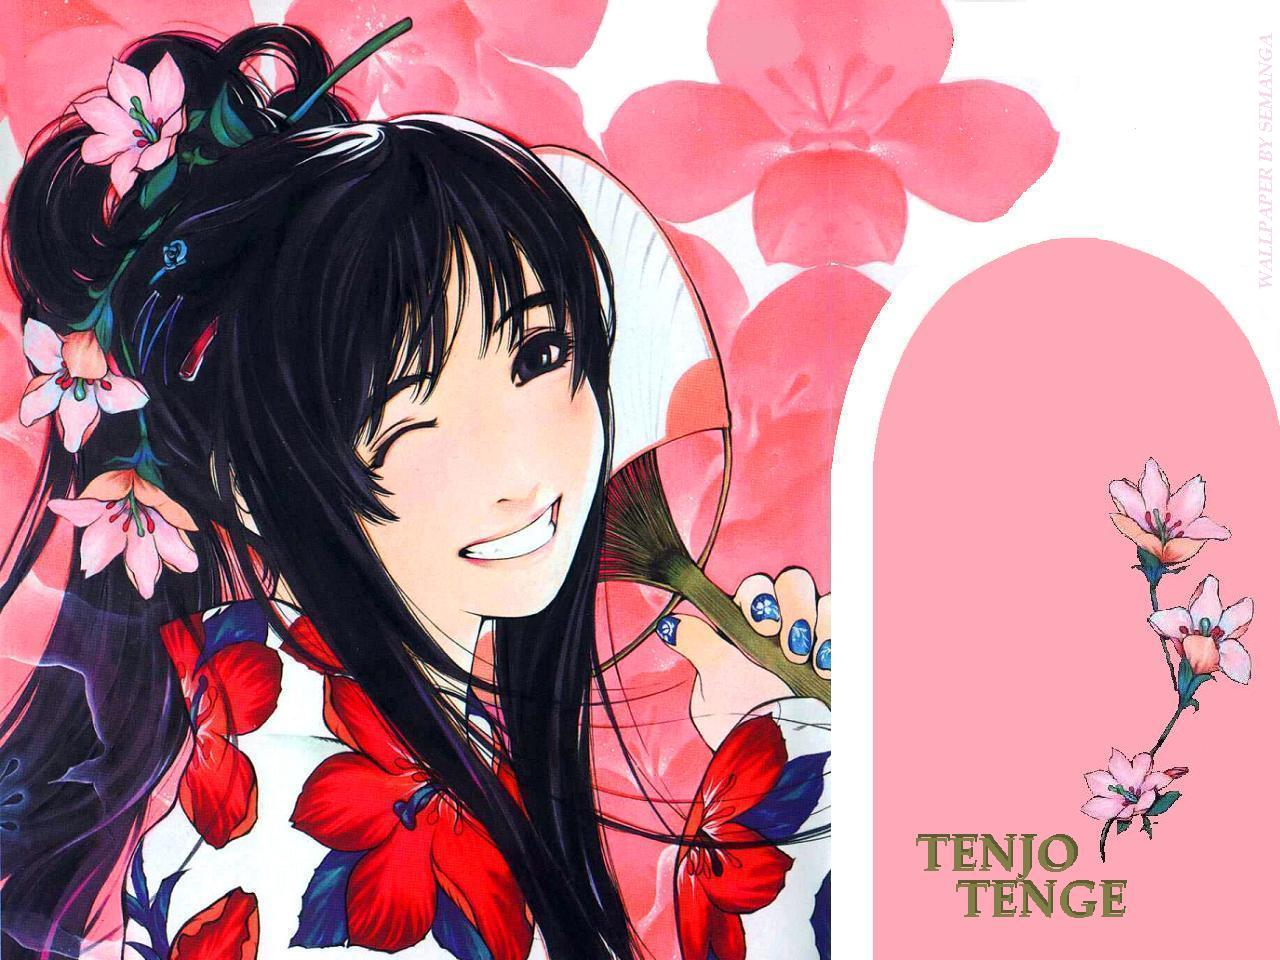 Anime 1280x960 anime Tenjou Tenge anime girls dark hair painted nails flower in hair